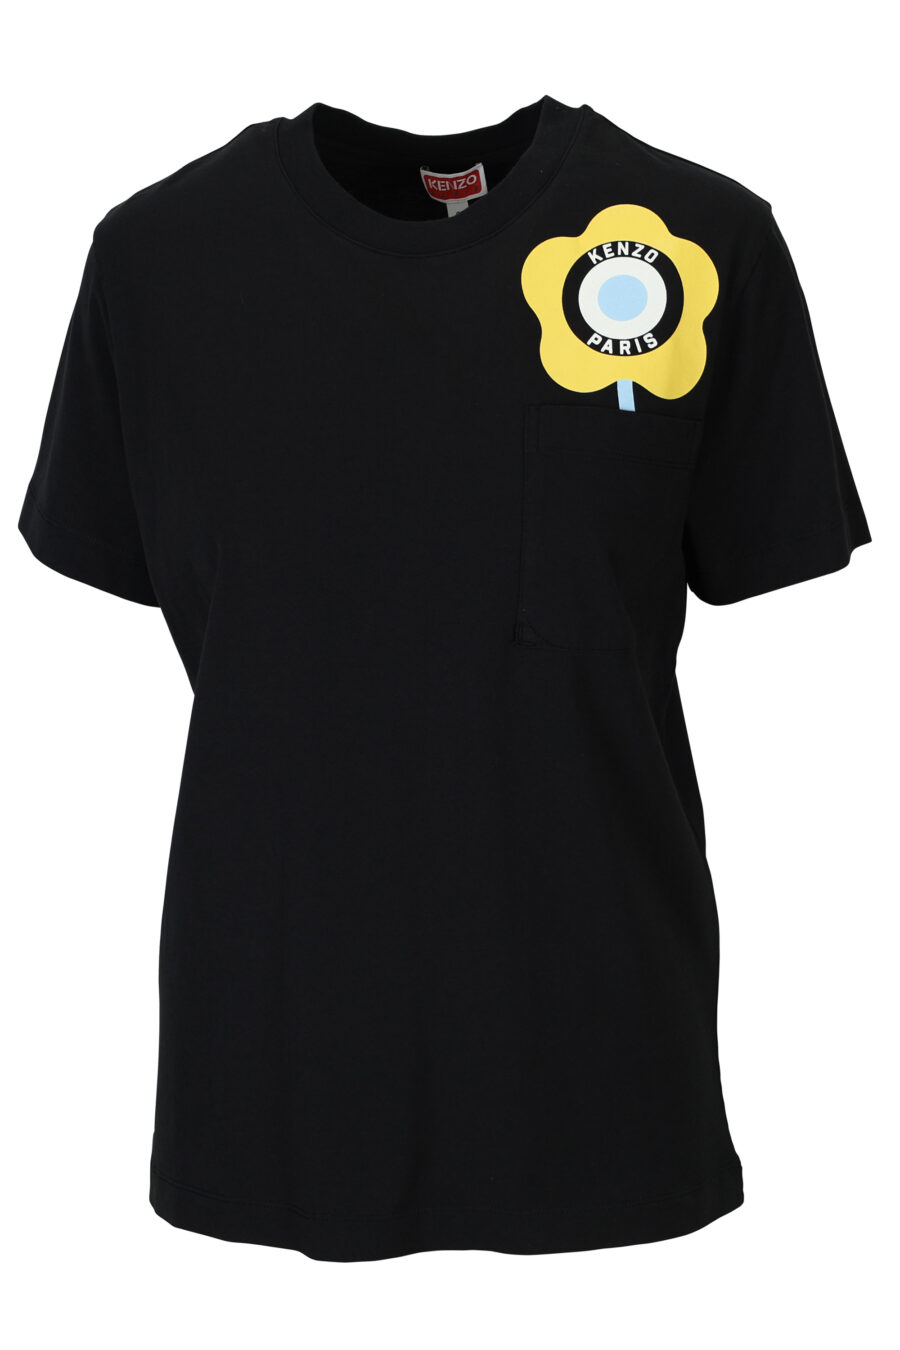 T-shirt noir avec logo jaune "kenzo target" - 3612230510654